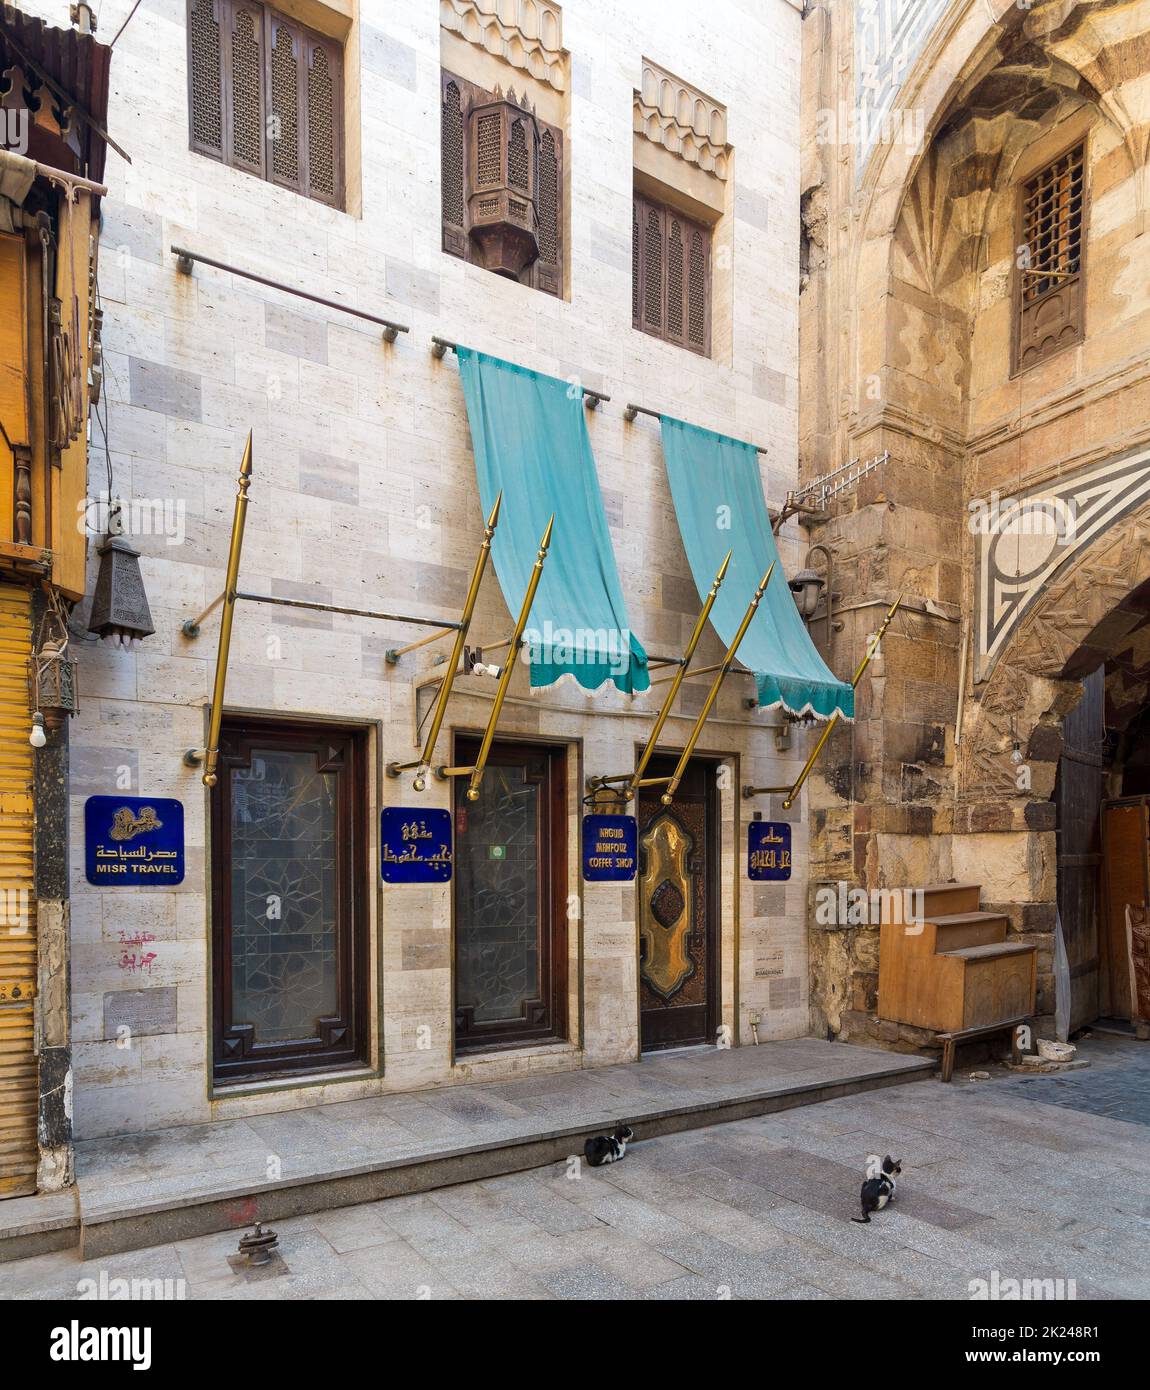 Cairo, Egypt- June 26 2020: Modern famous Naguib Mahfouz coffeehouse, located in historic Mamluk era Khan al-Khalili famous bazaar and souq, closed du Stock Photo